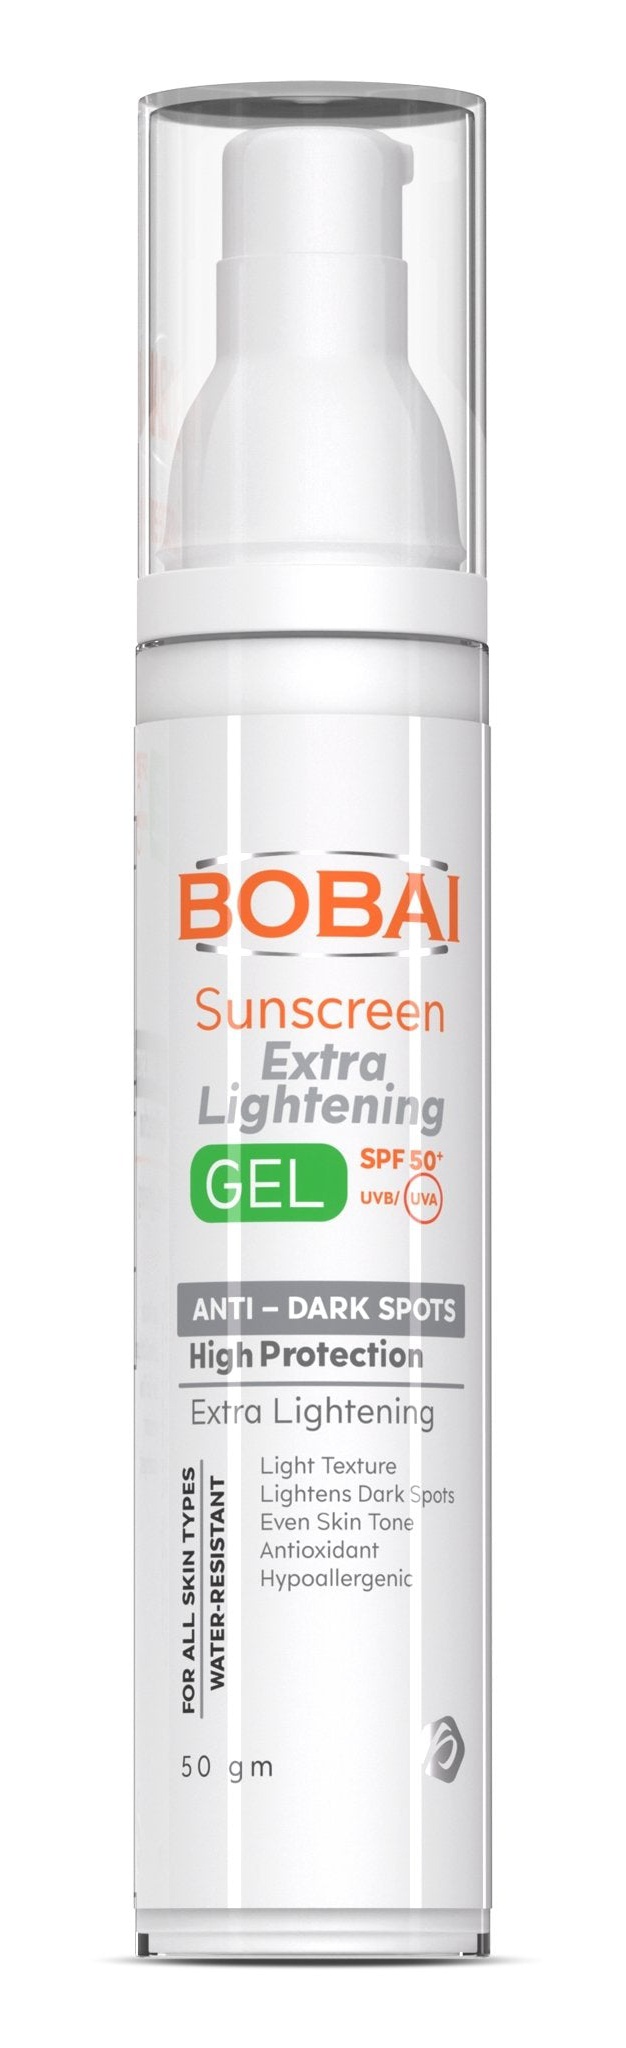 Bobai Sunscreen Extra Lightening Gel SPF 50